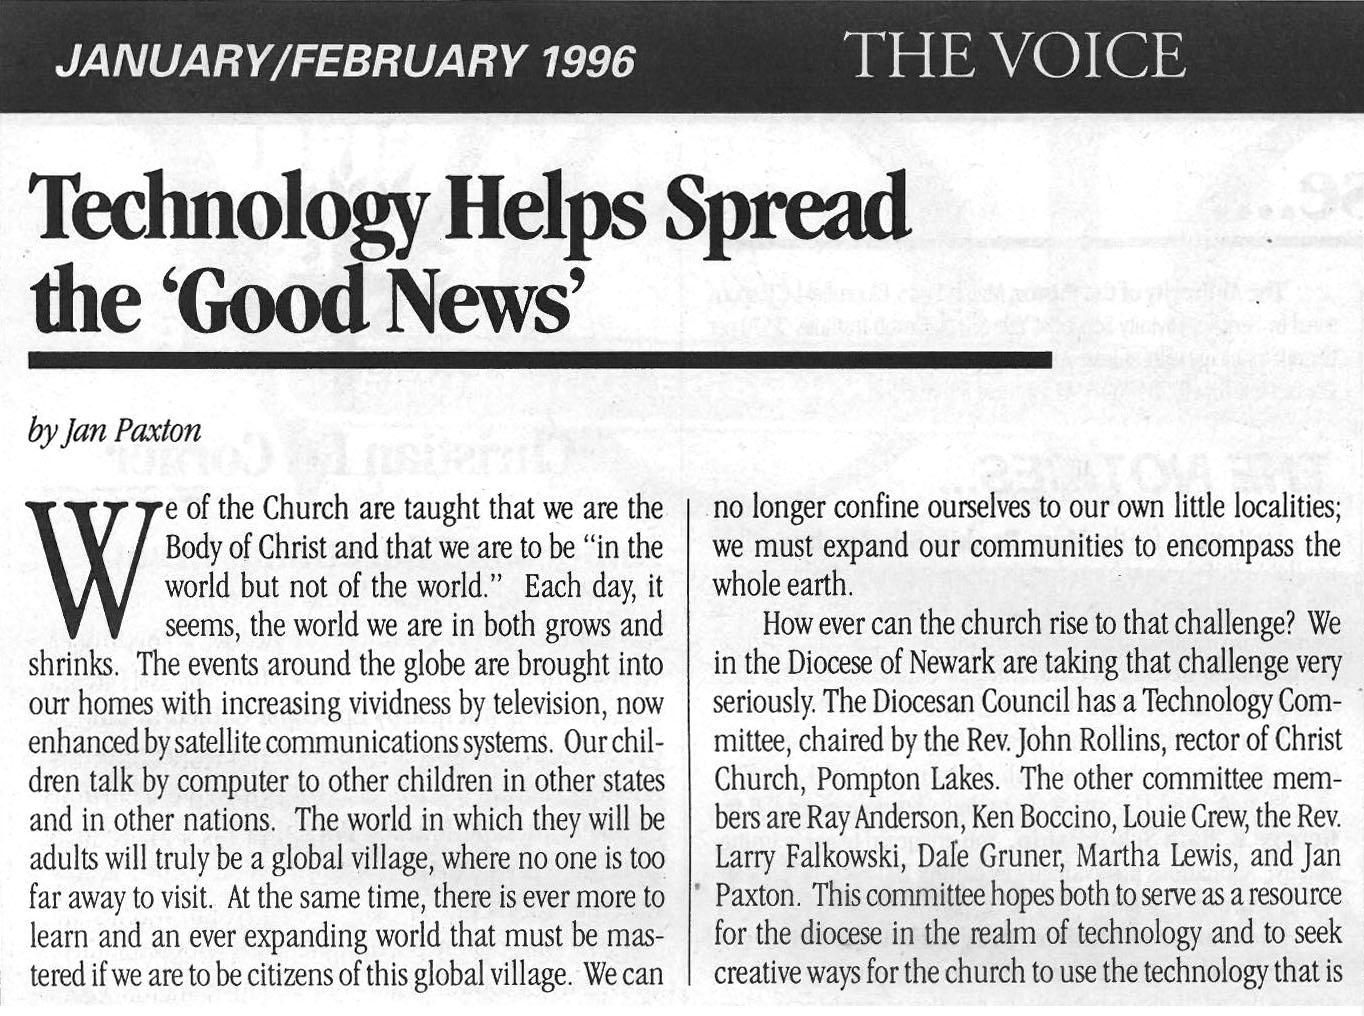 The VOICE, January/February 1996